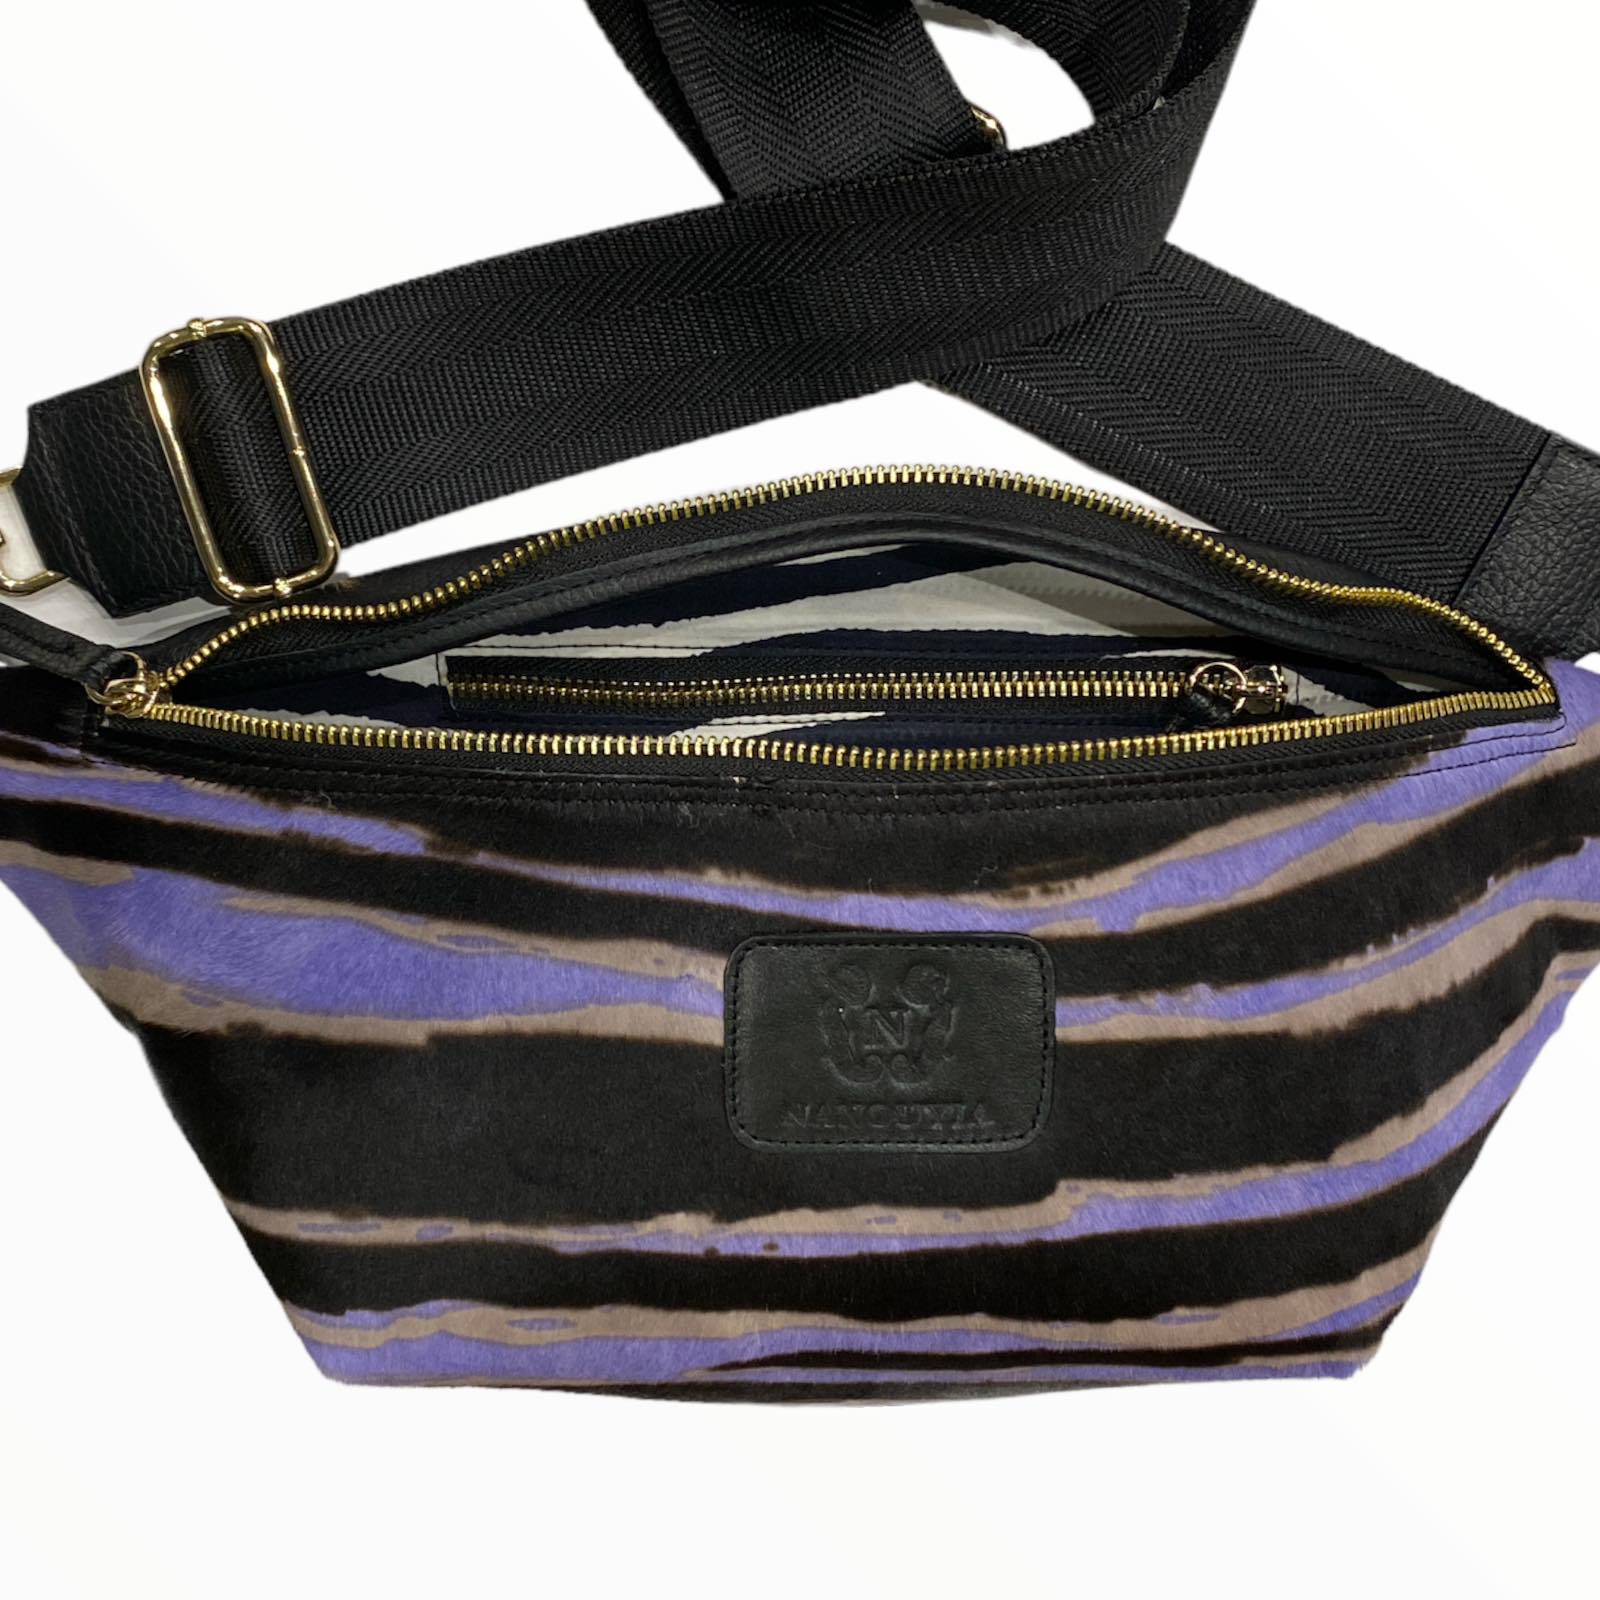 Xl black and purple calf-hair leather belt bag